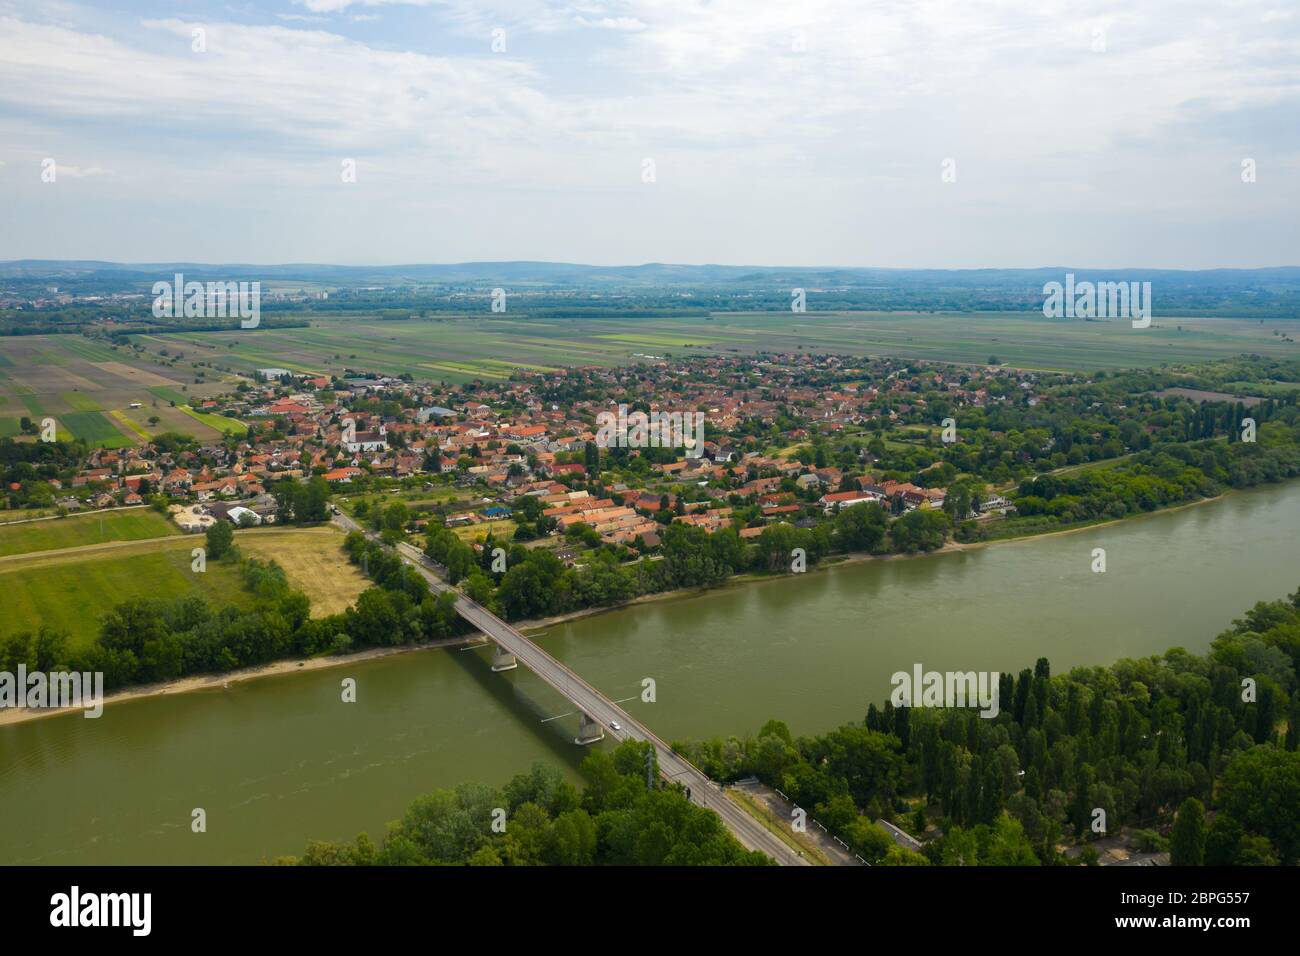 Zoltan Tildy Bridge over Danube river. Tahitotfalu in the background. Stock photo made on sunny summer day. Stock Photo